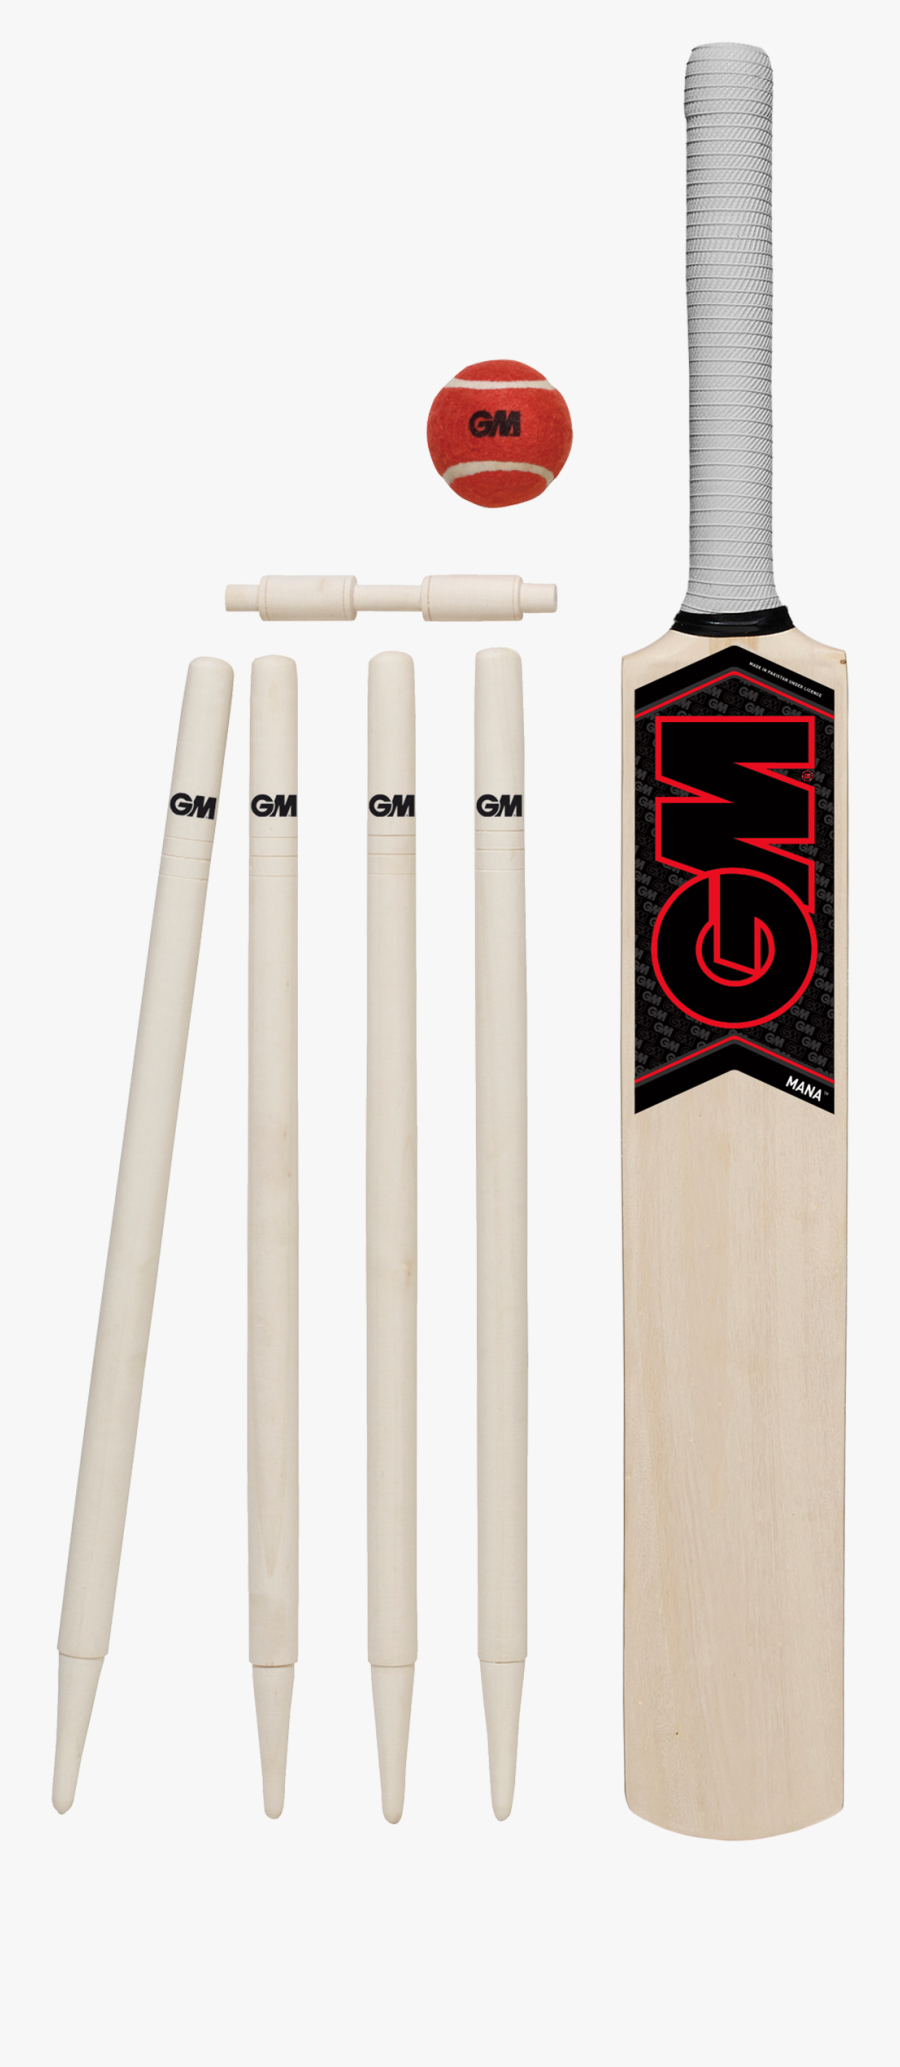 Cricket Bat And Ball Png - Gm Mana Cricket Set, Transparent Clipart